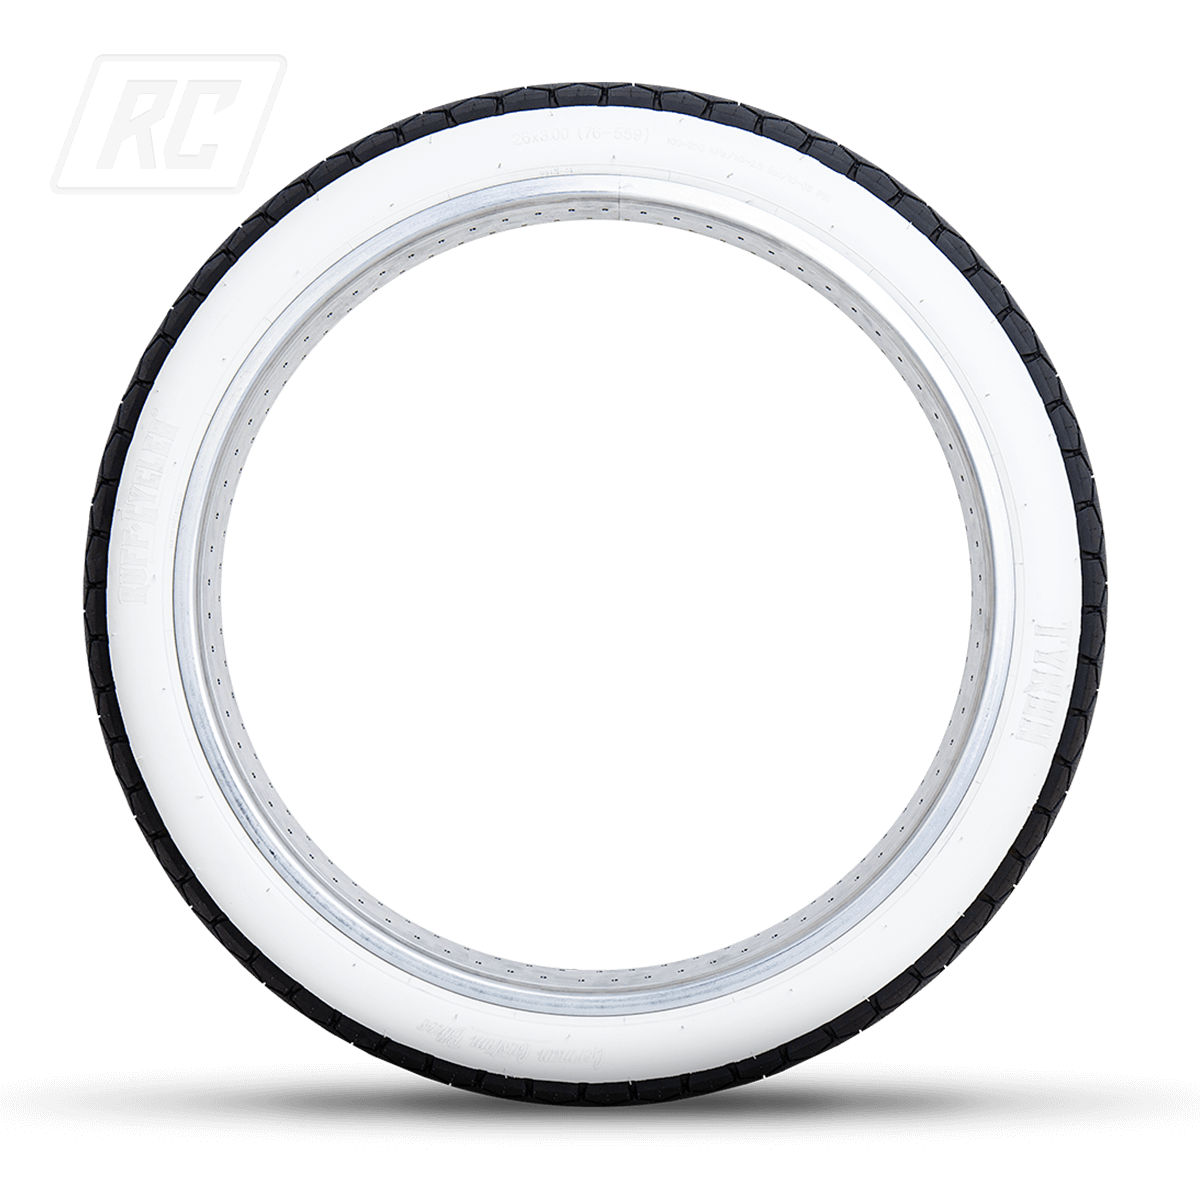 RUFF CYCLES Tyron Tire White Wall 26x3.0